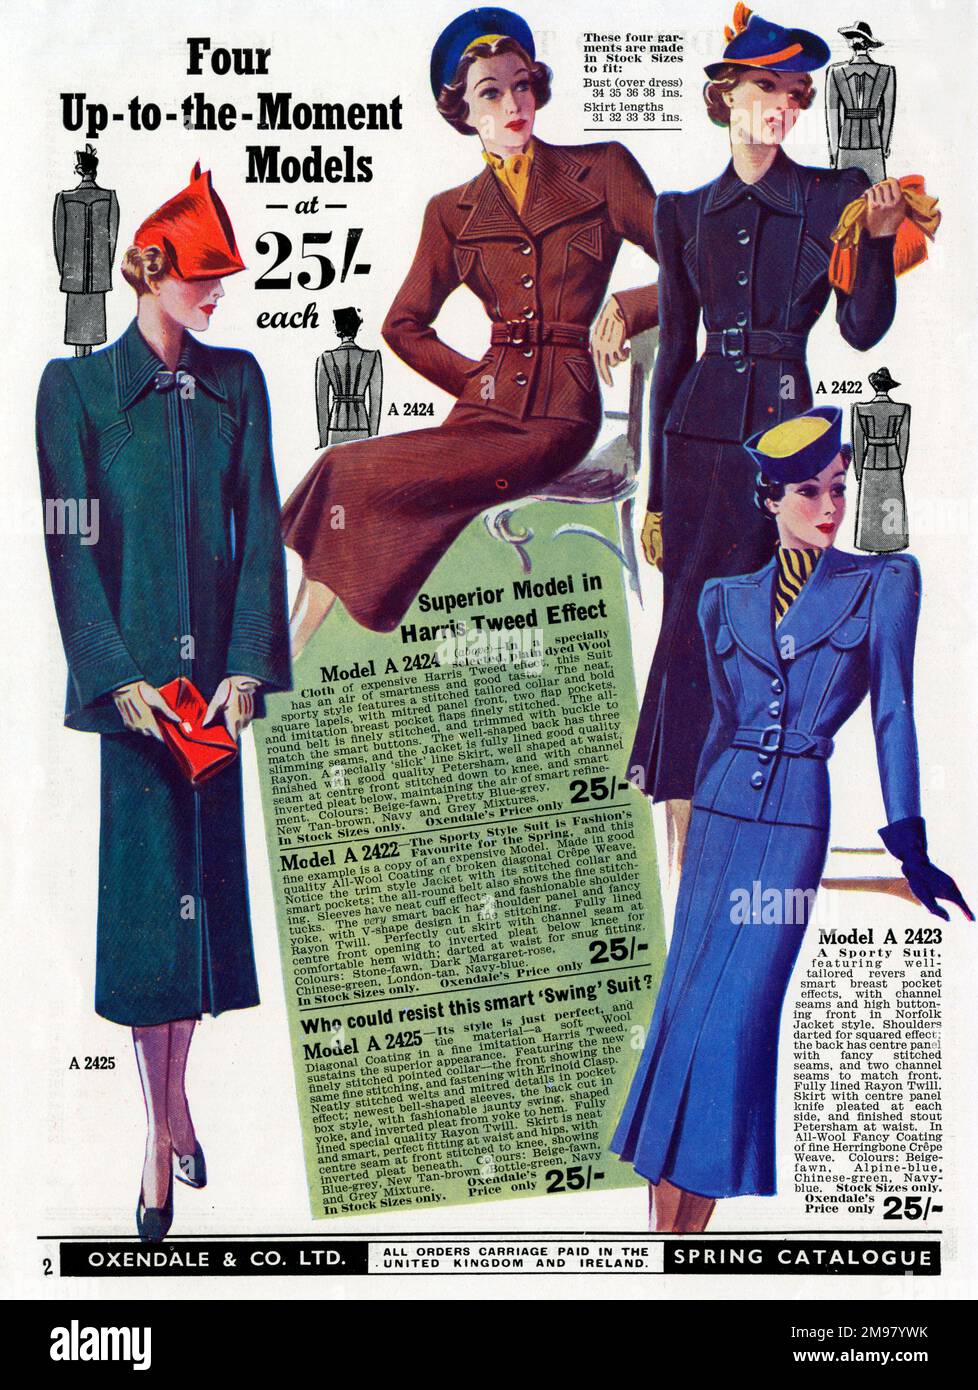 Werbung, Frühlingsmode für Damen, Oxendale & Co-Katalog. Stockfoto